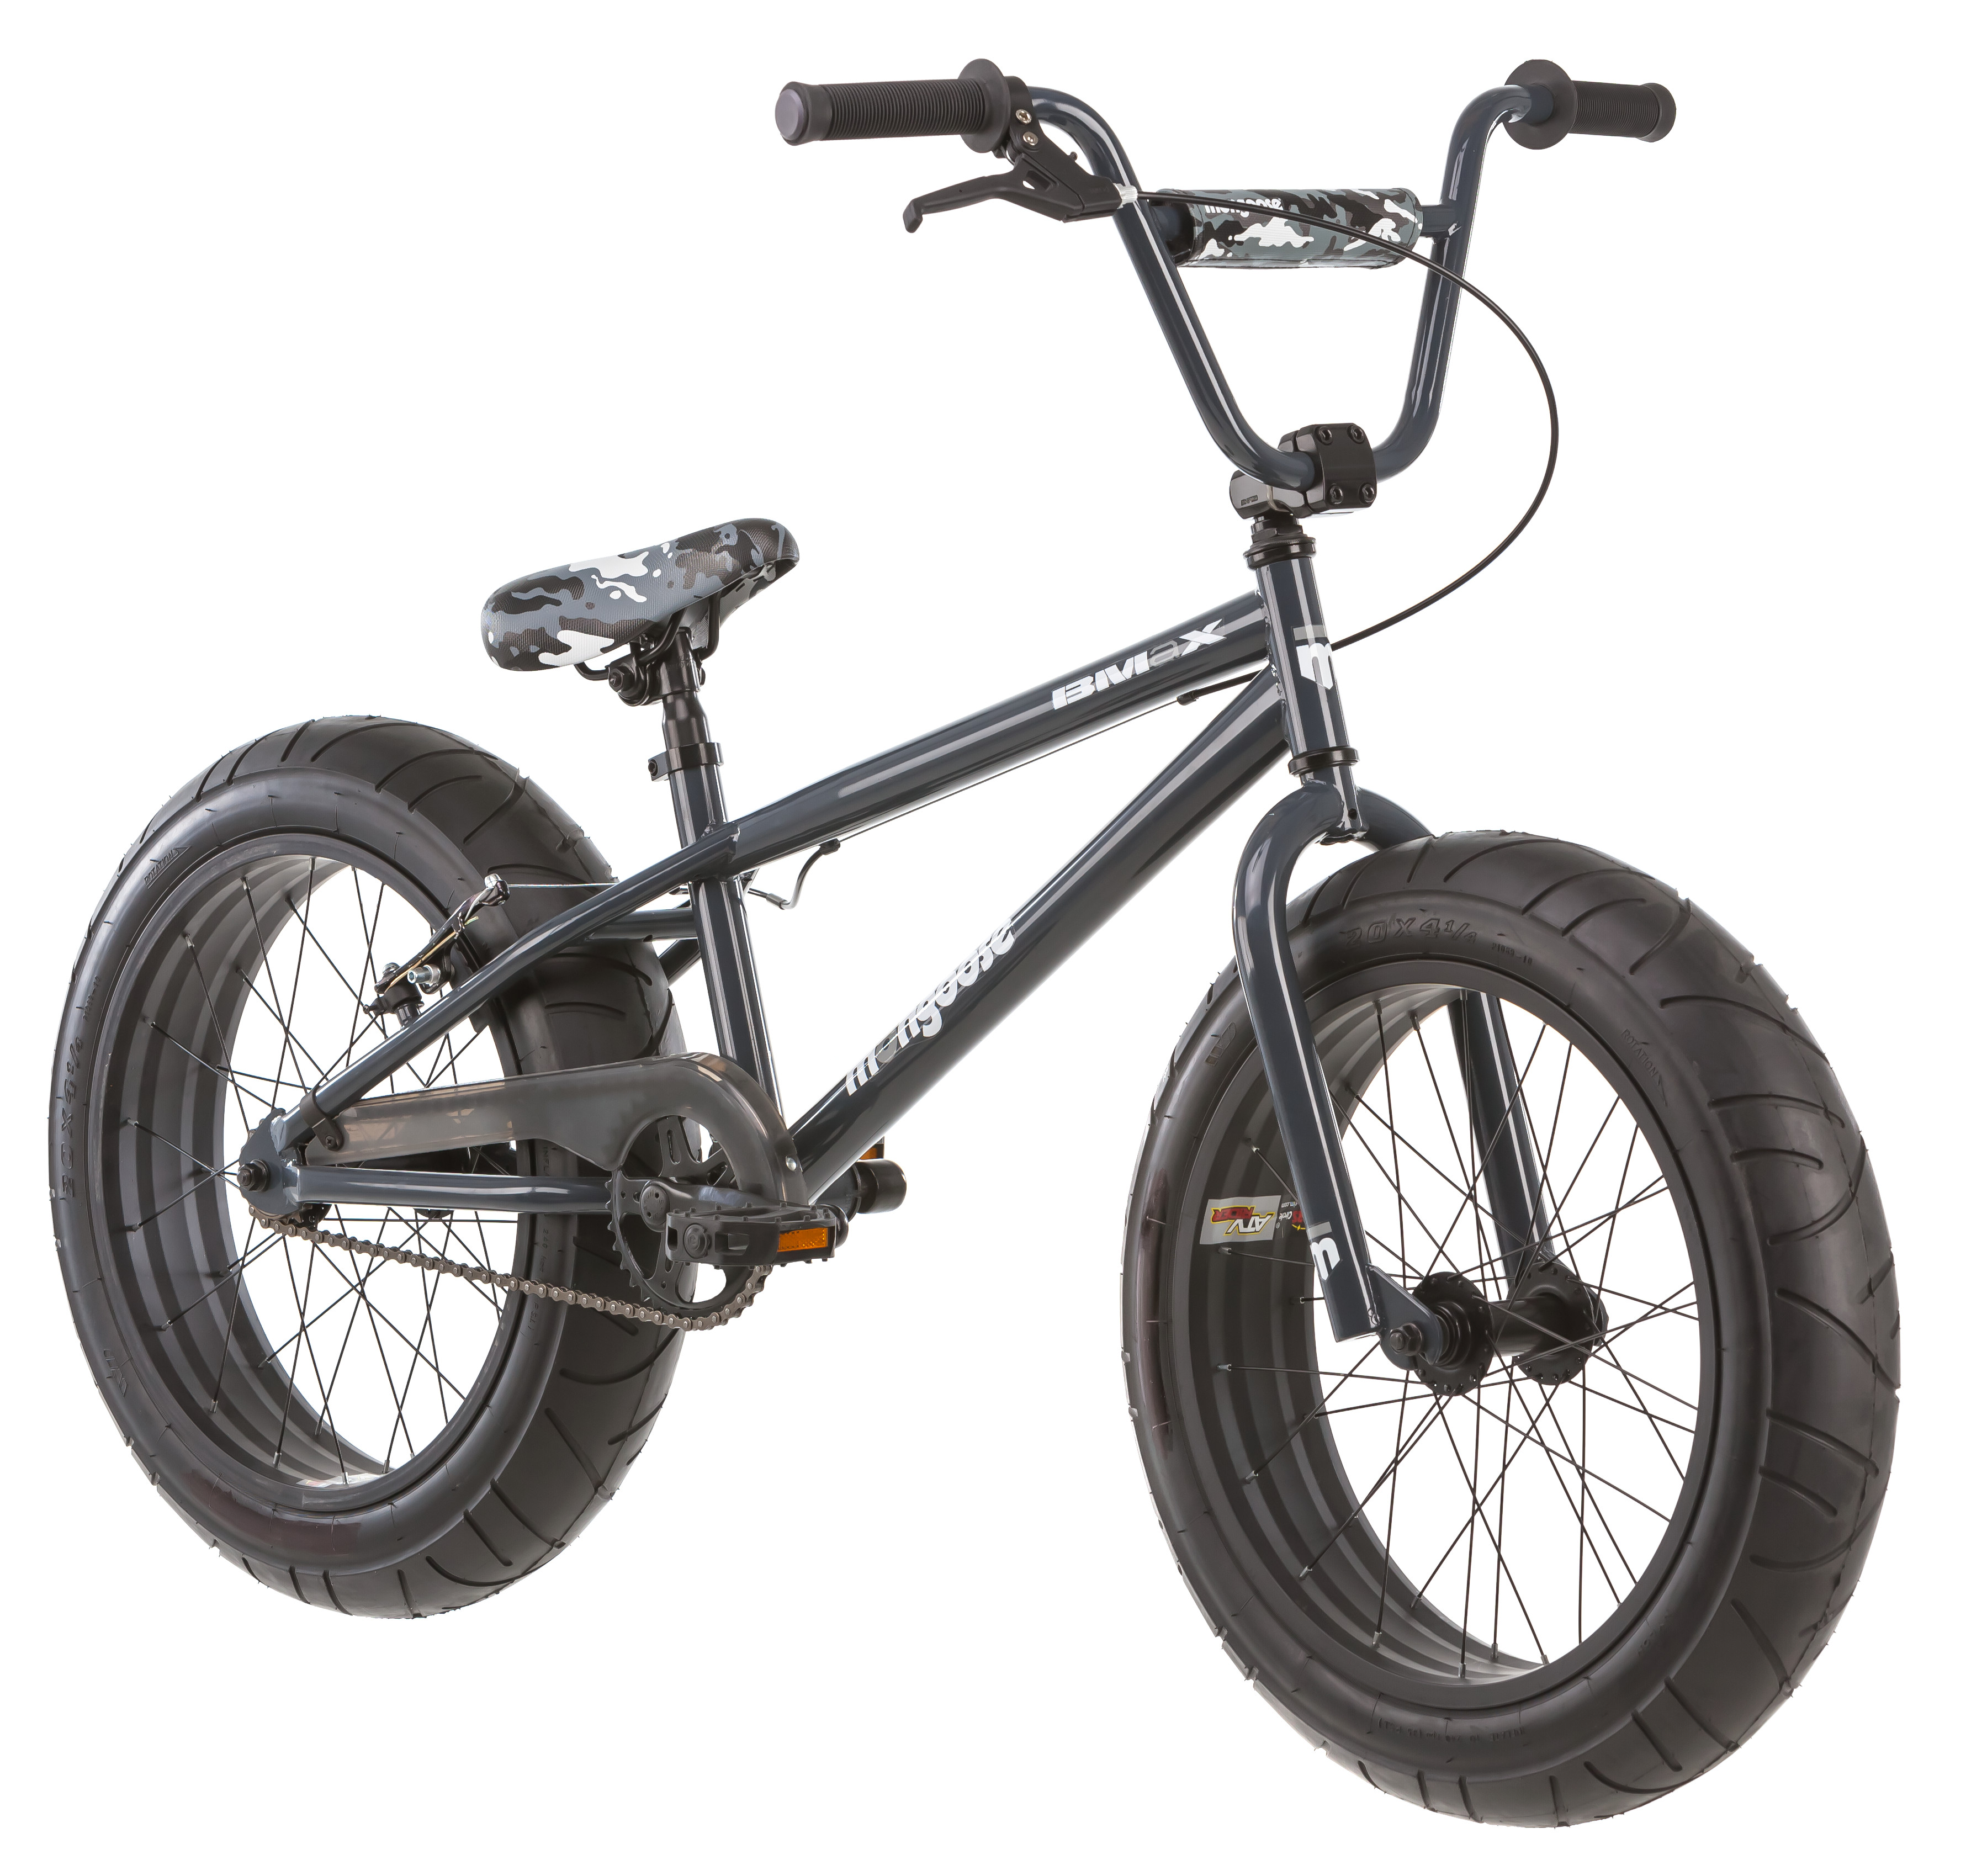 20" Mongoose BMaX All-Terrain Fat Tire Mountain Bike, Black/Gray - image 1 of 5